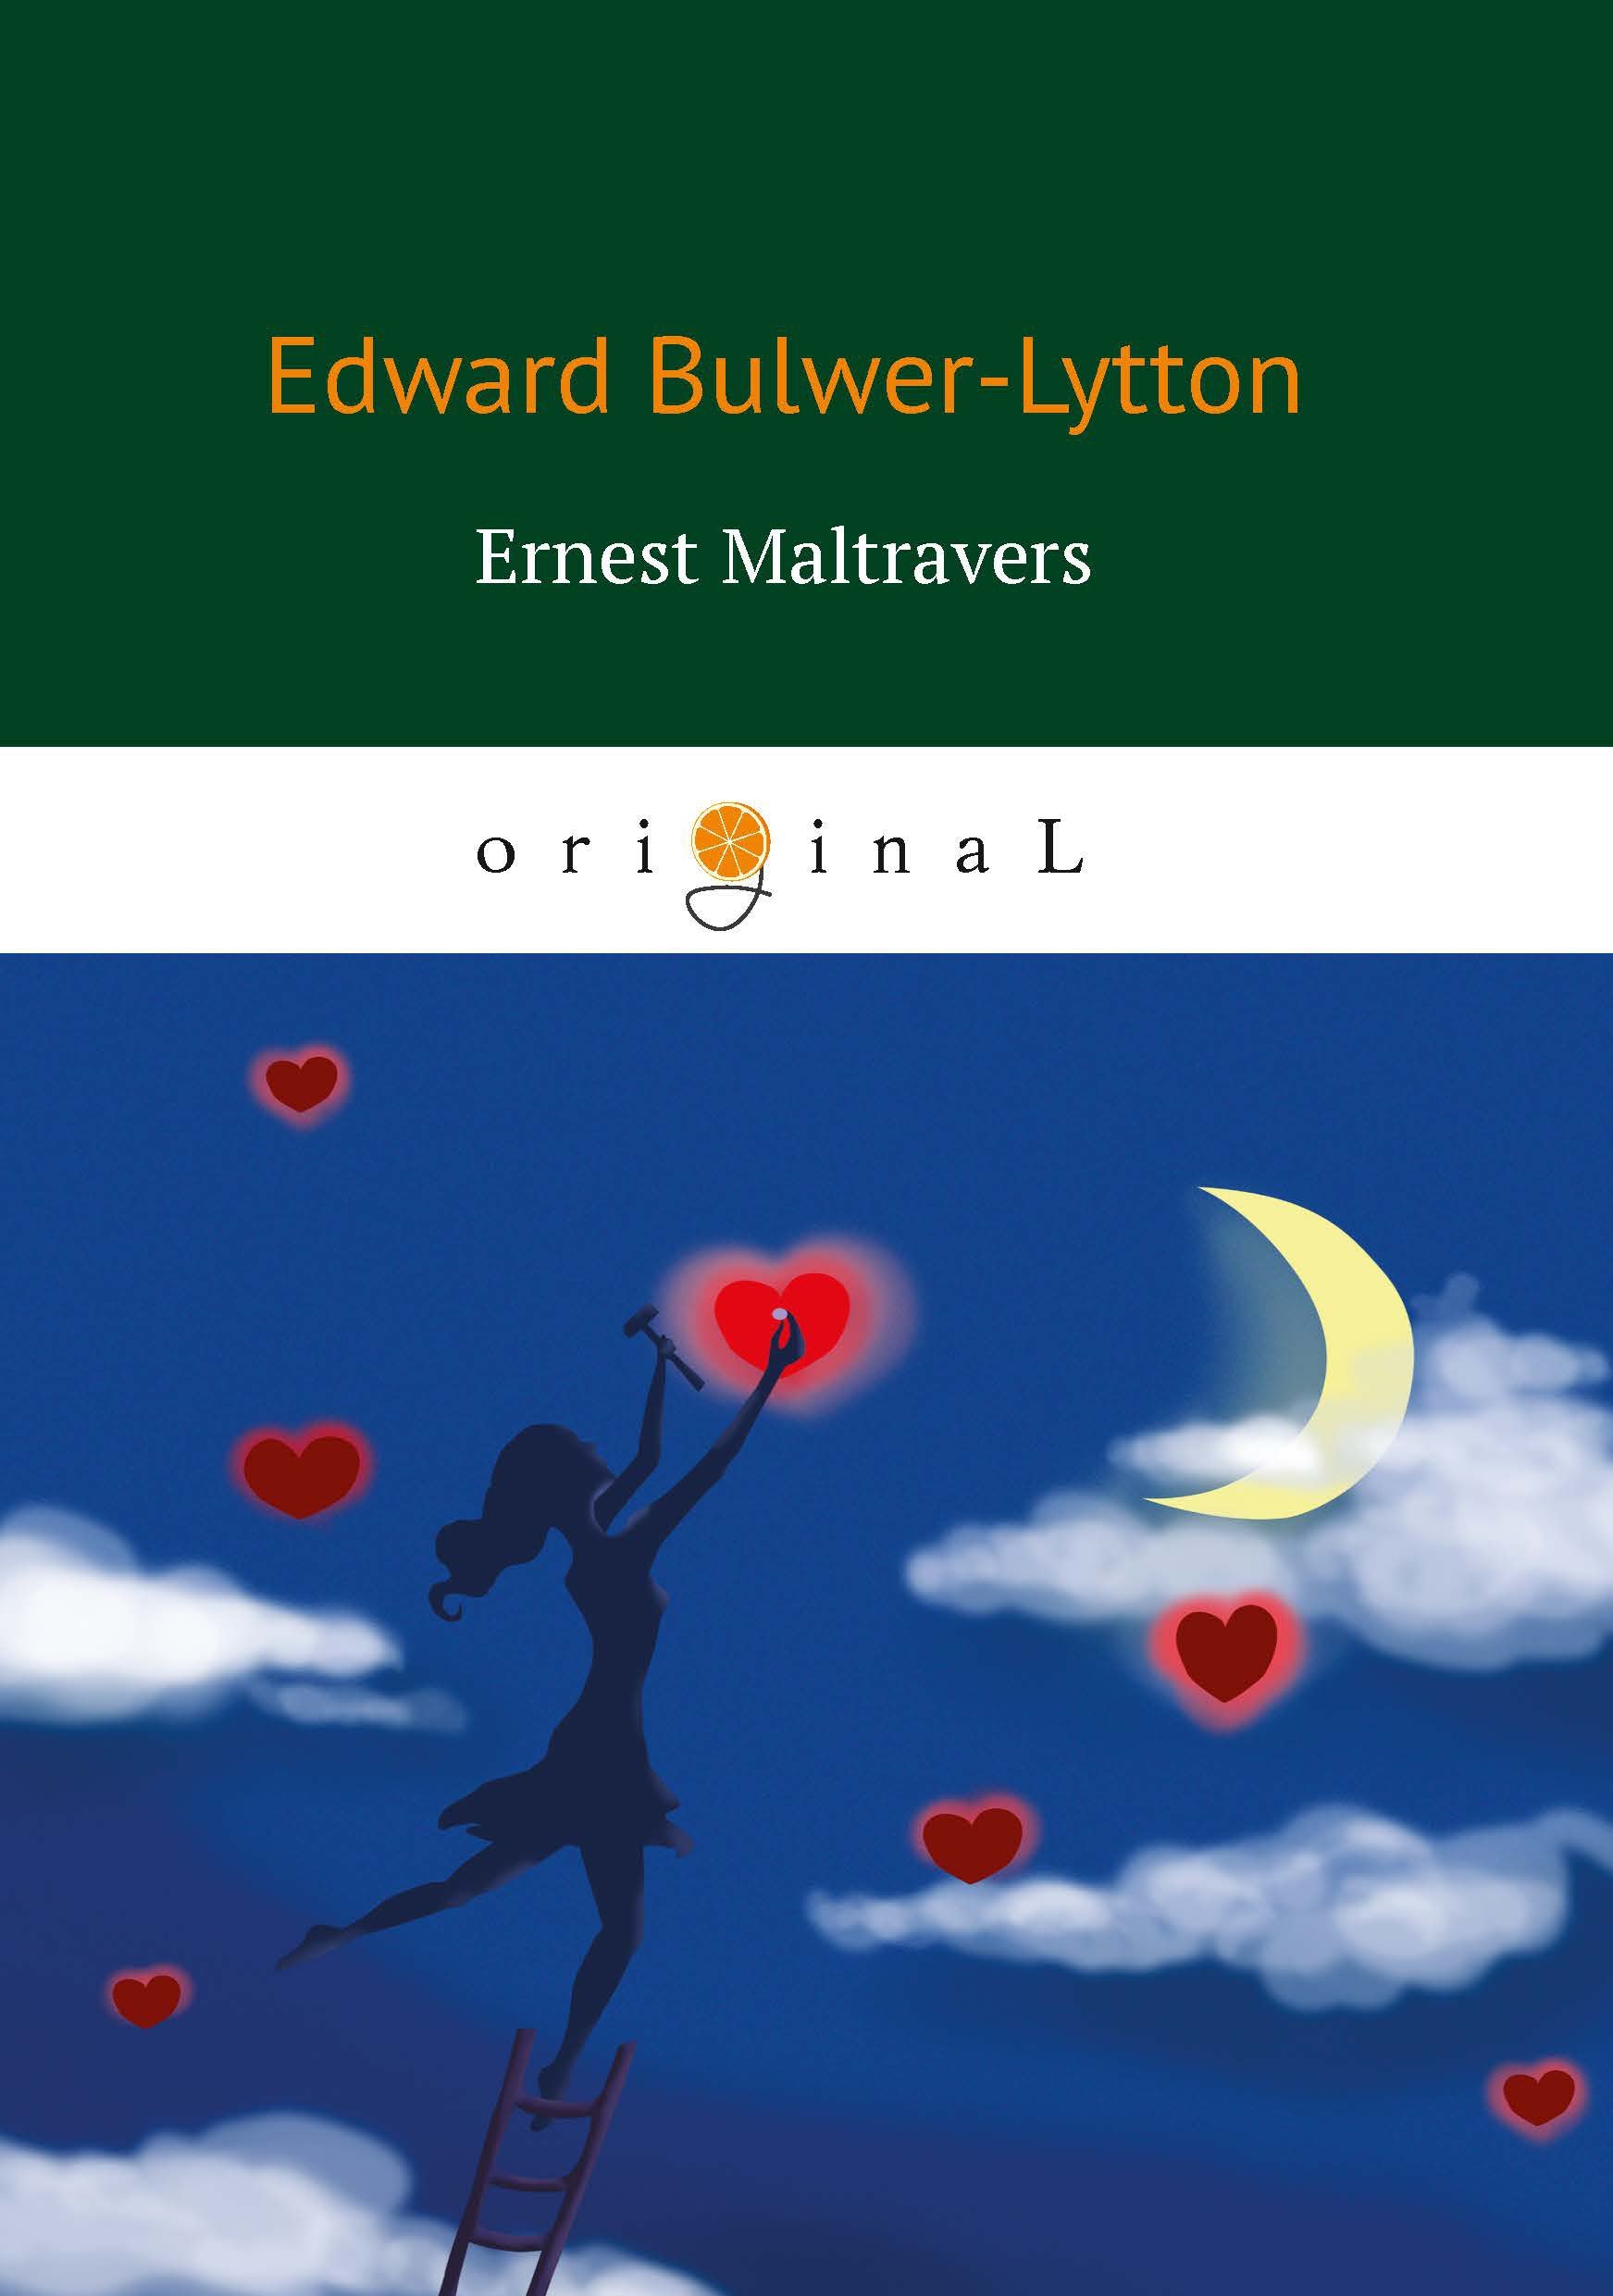 Бульвер-Литтон Эдвард - Ernest Maltravers = Эрнест Мальтраверс: на англ.яз